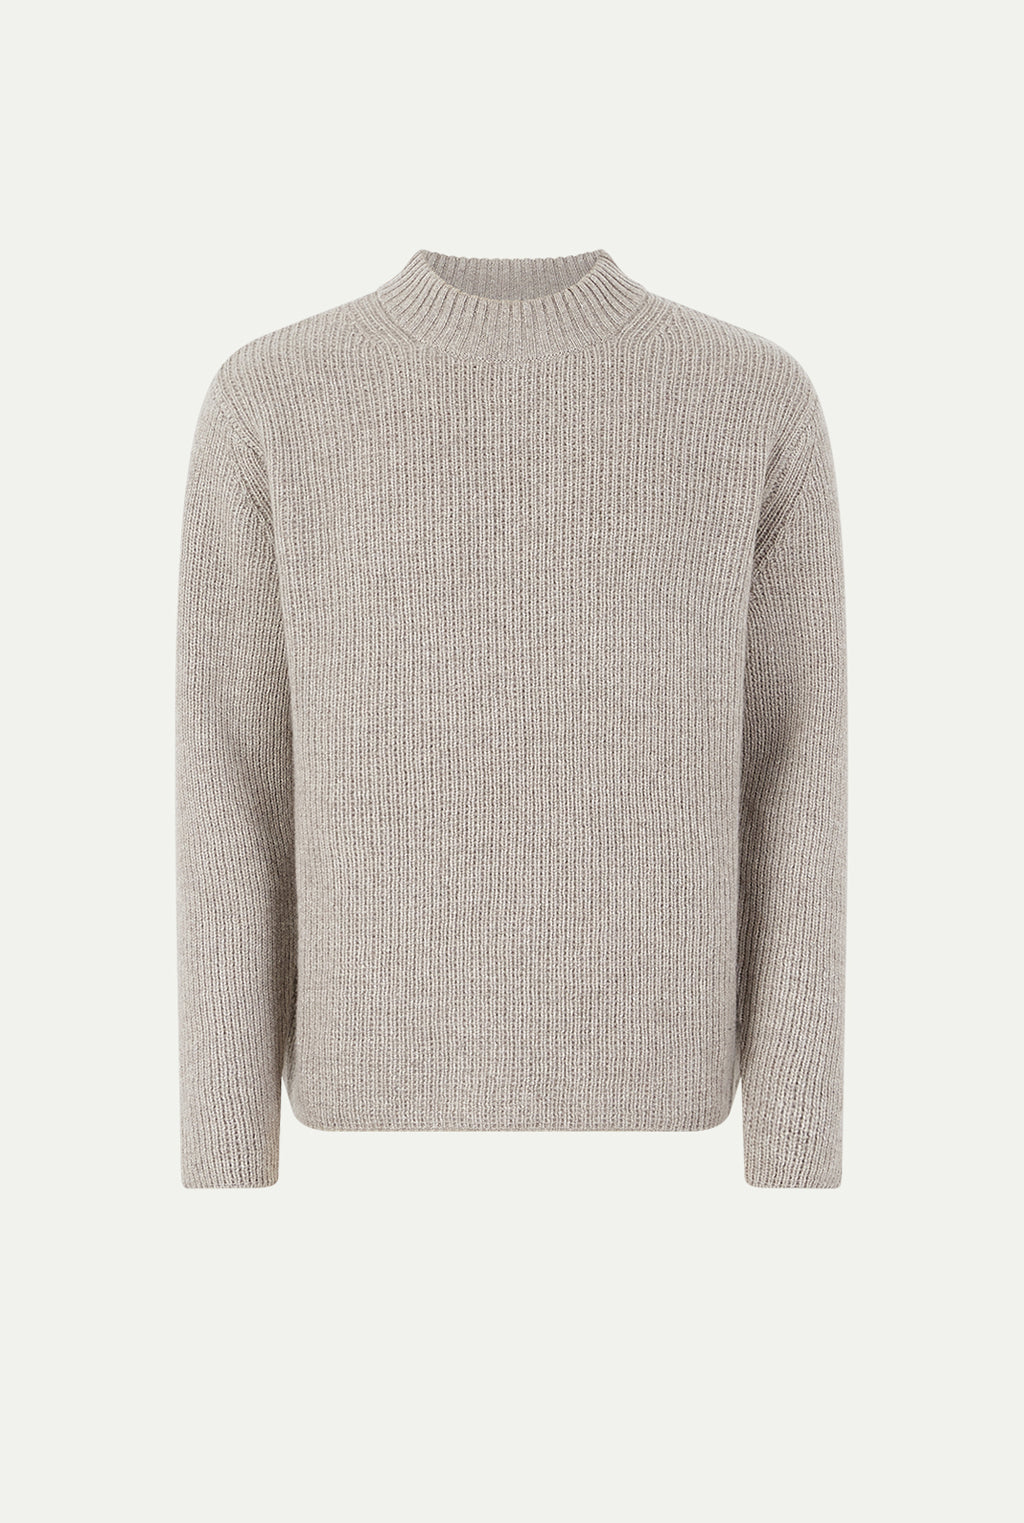 ST MALO cashmere sweater ( men version)